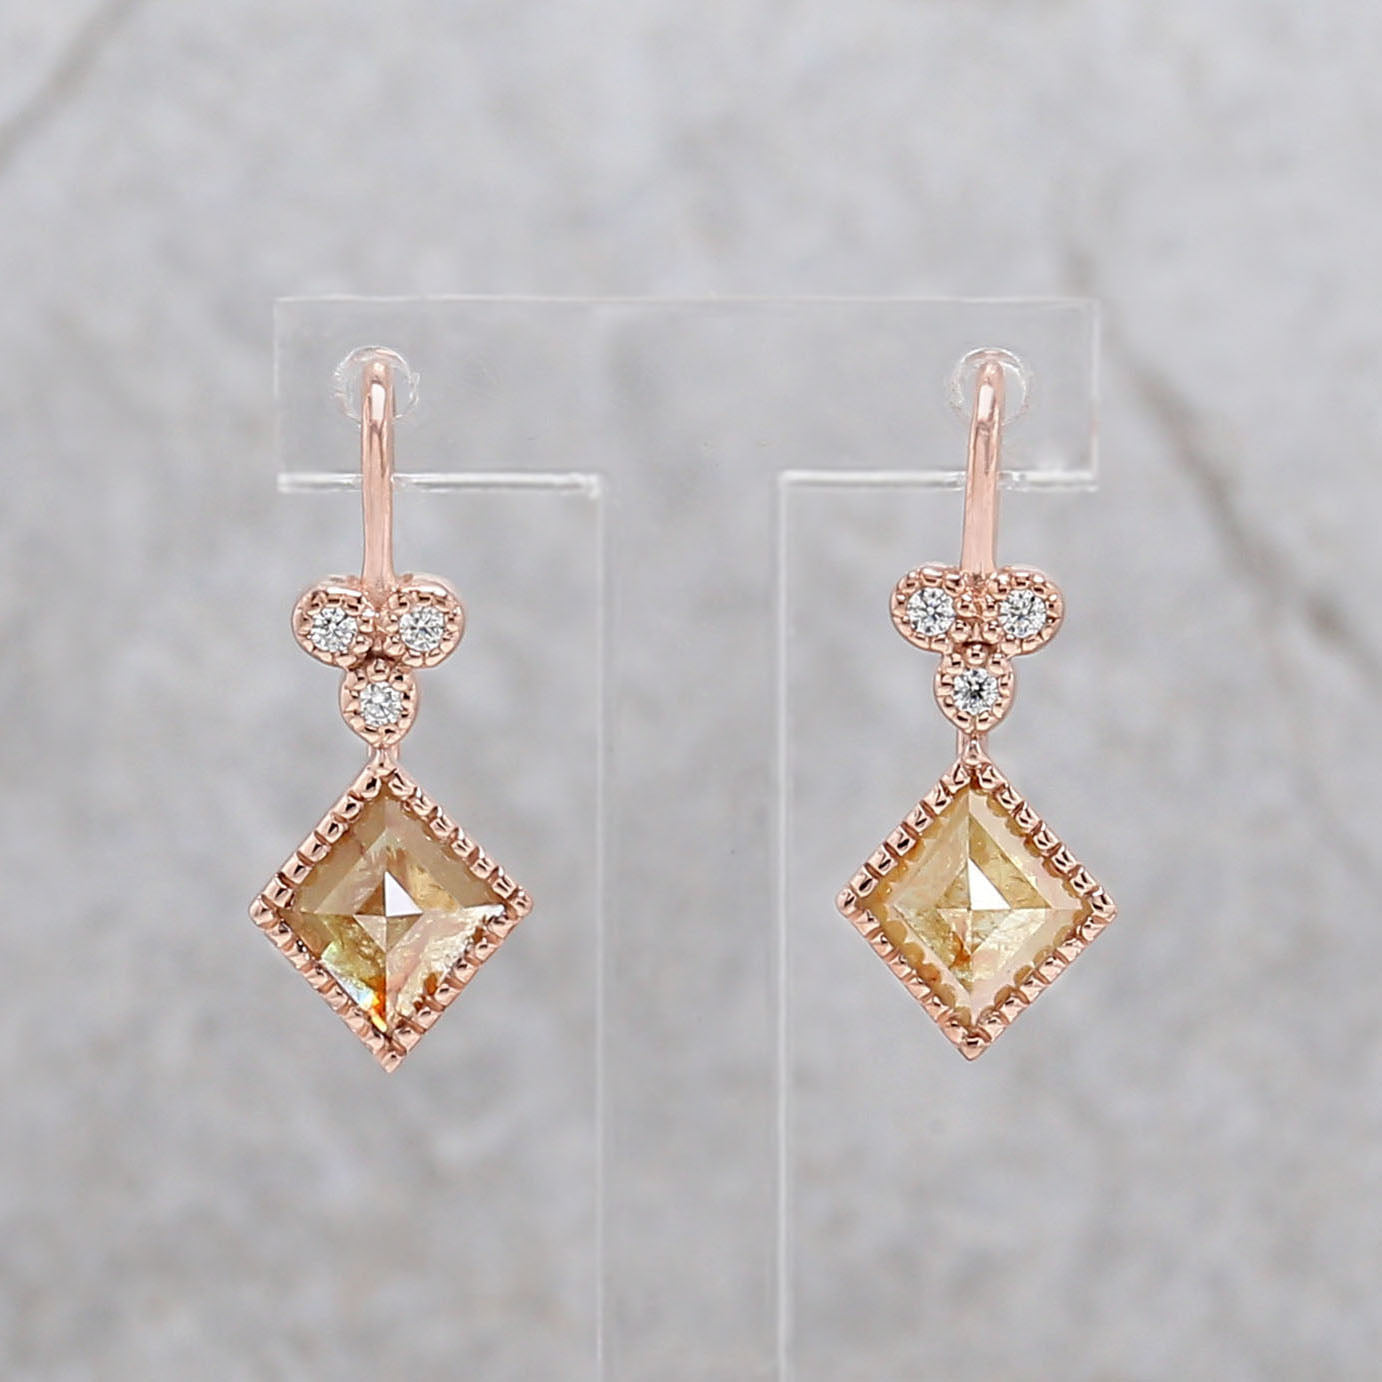 Kite Brown Color Diamond Earring Engagement Wedding Gift Earring 14K Solid Rose White Yellow Gold Earring 0.82 CT KDL2462